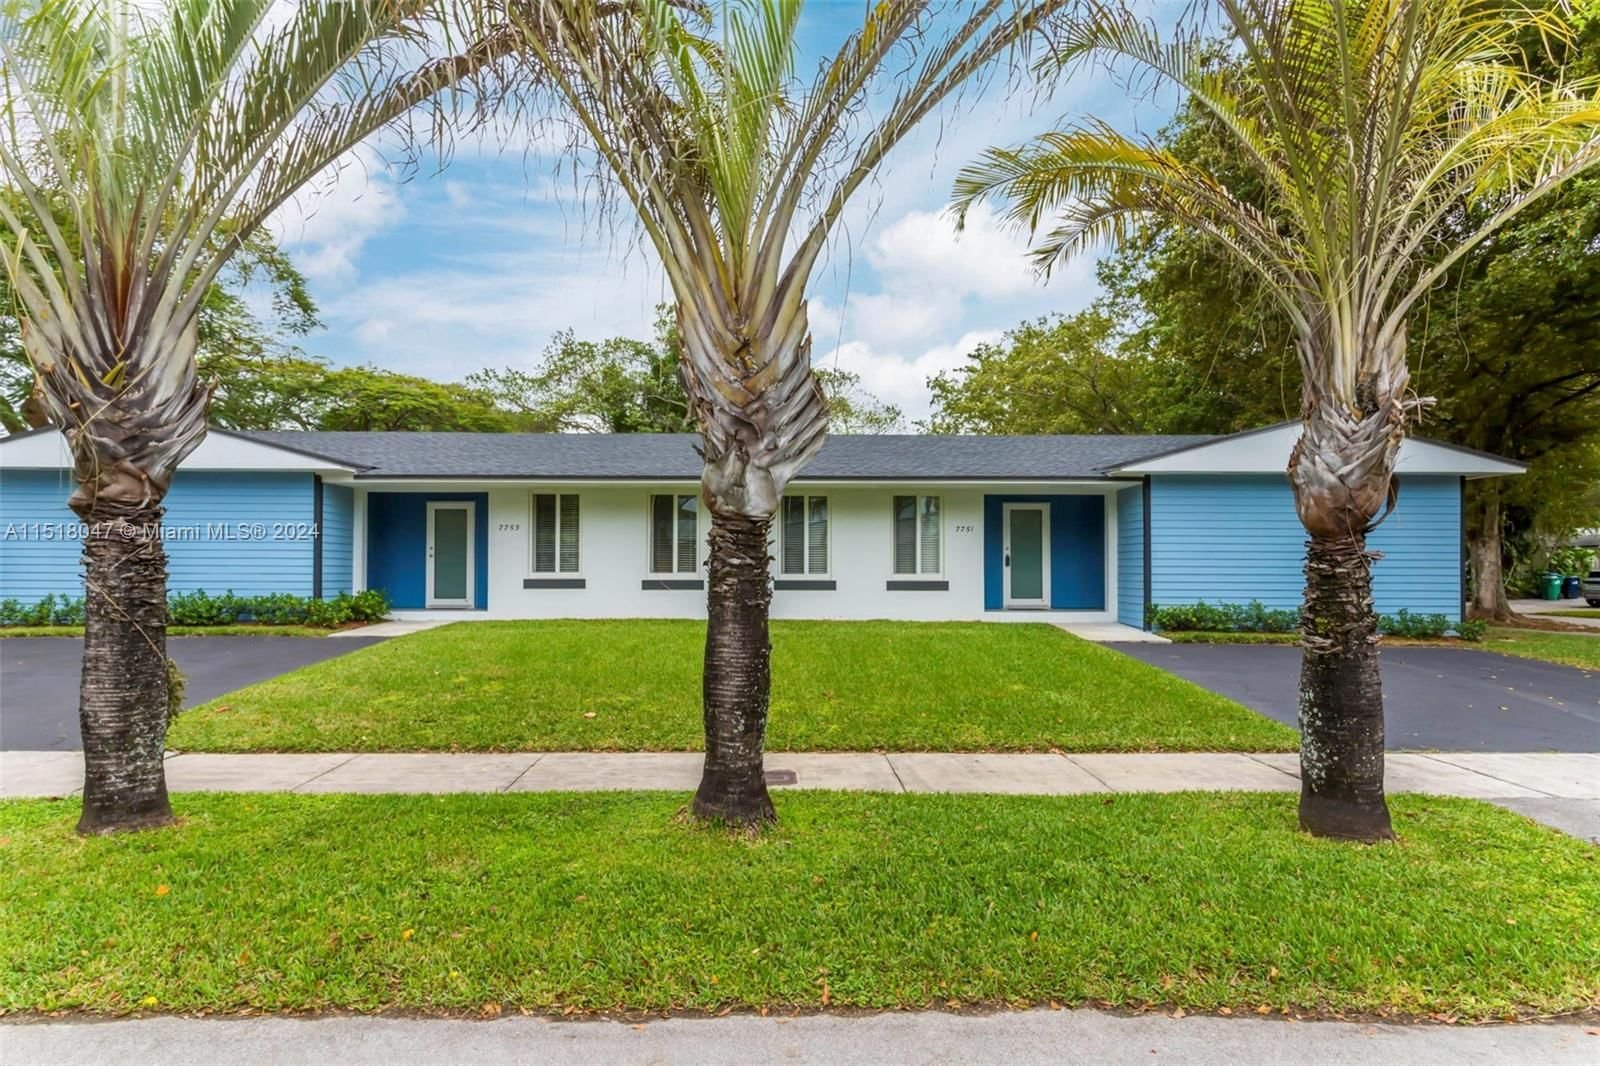 Real estate property located at 7751 106th Ter, Miami-Dade County, PALMETTO DUPLEXES ADDN NO, Pinecrest, FL